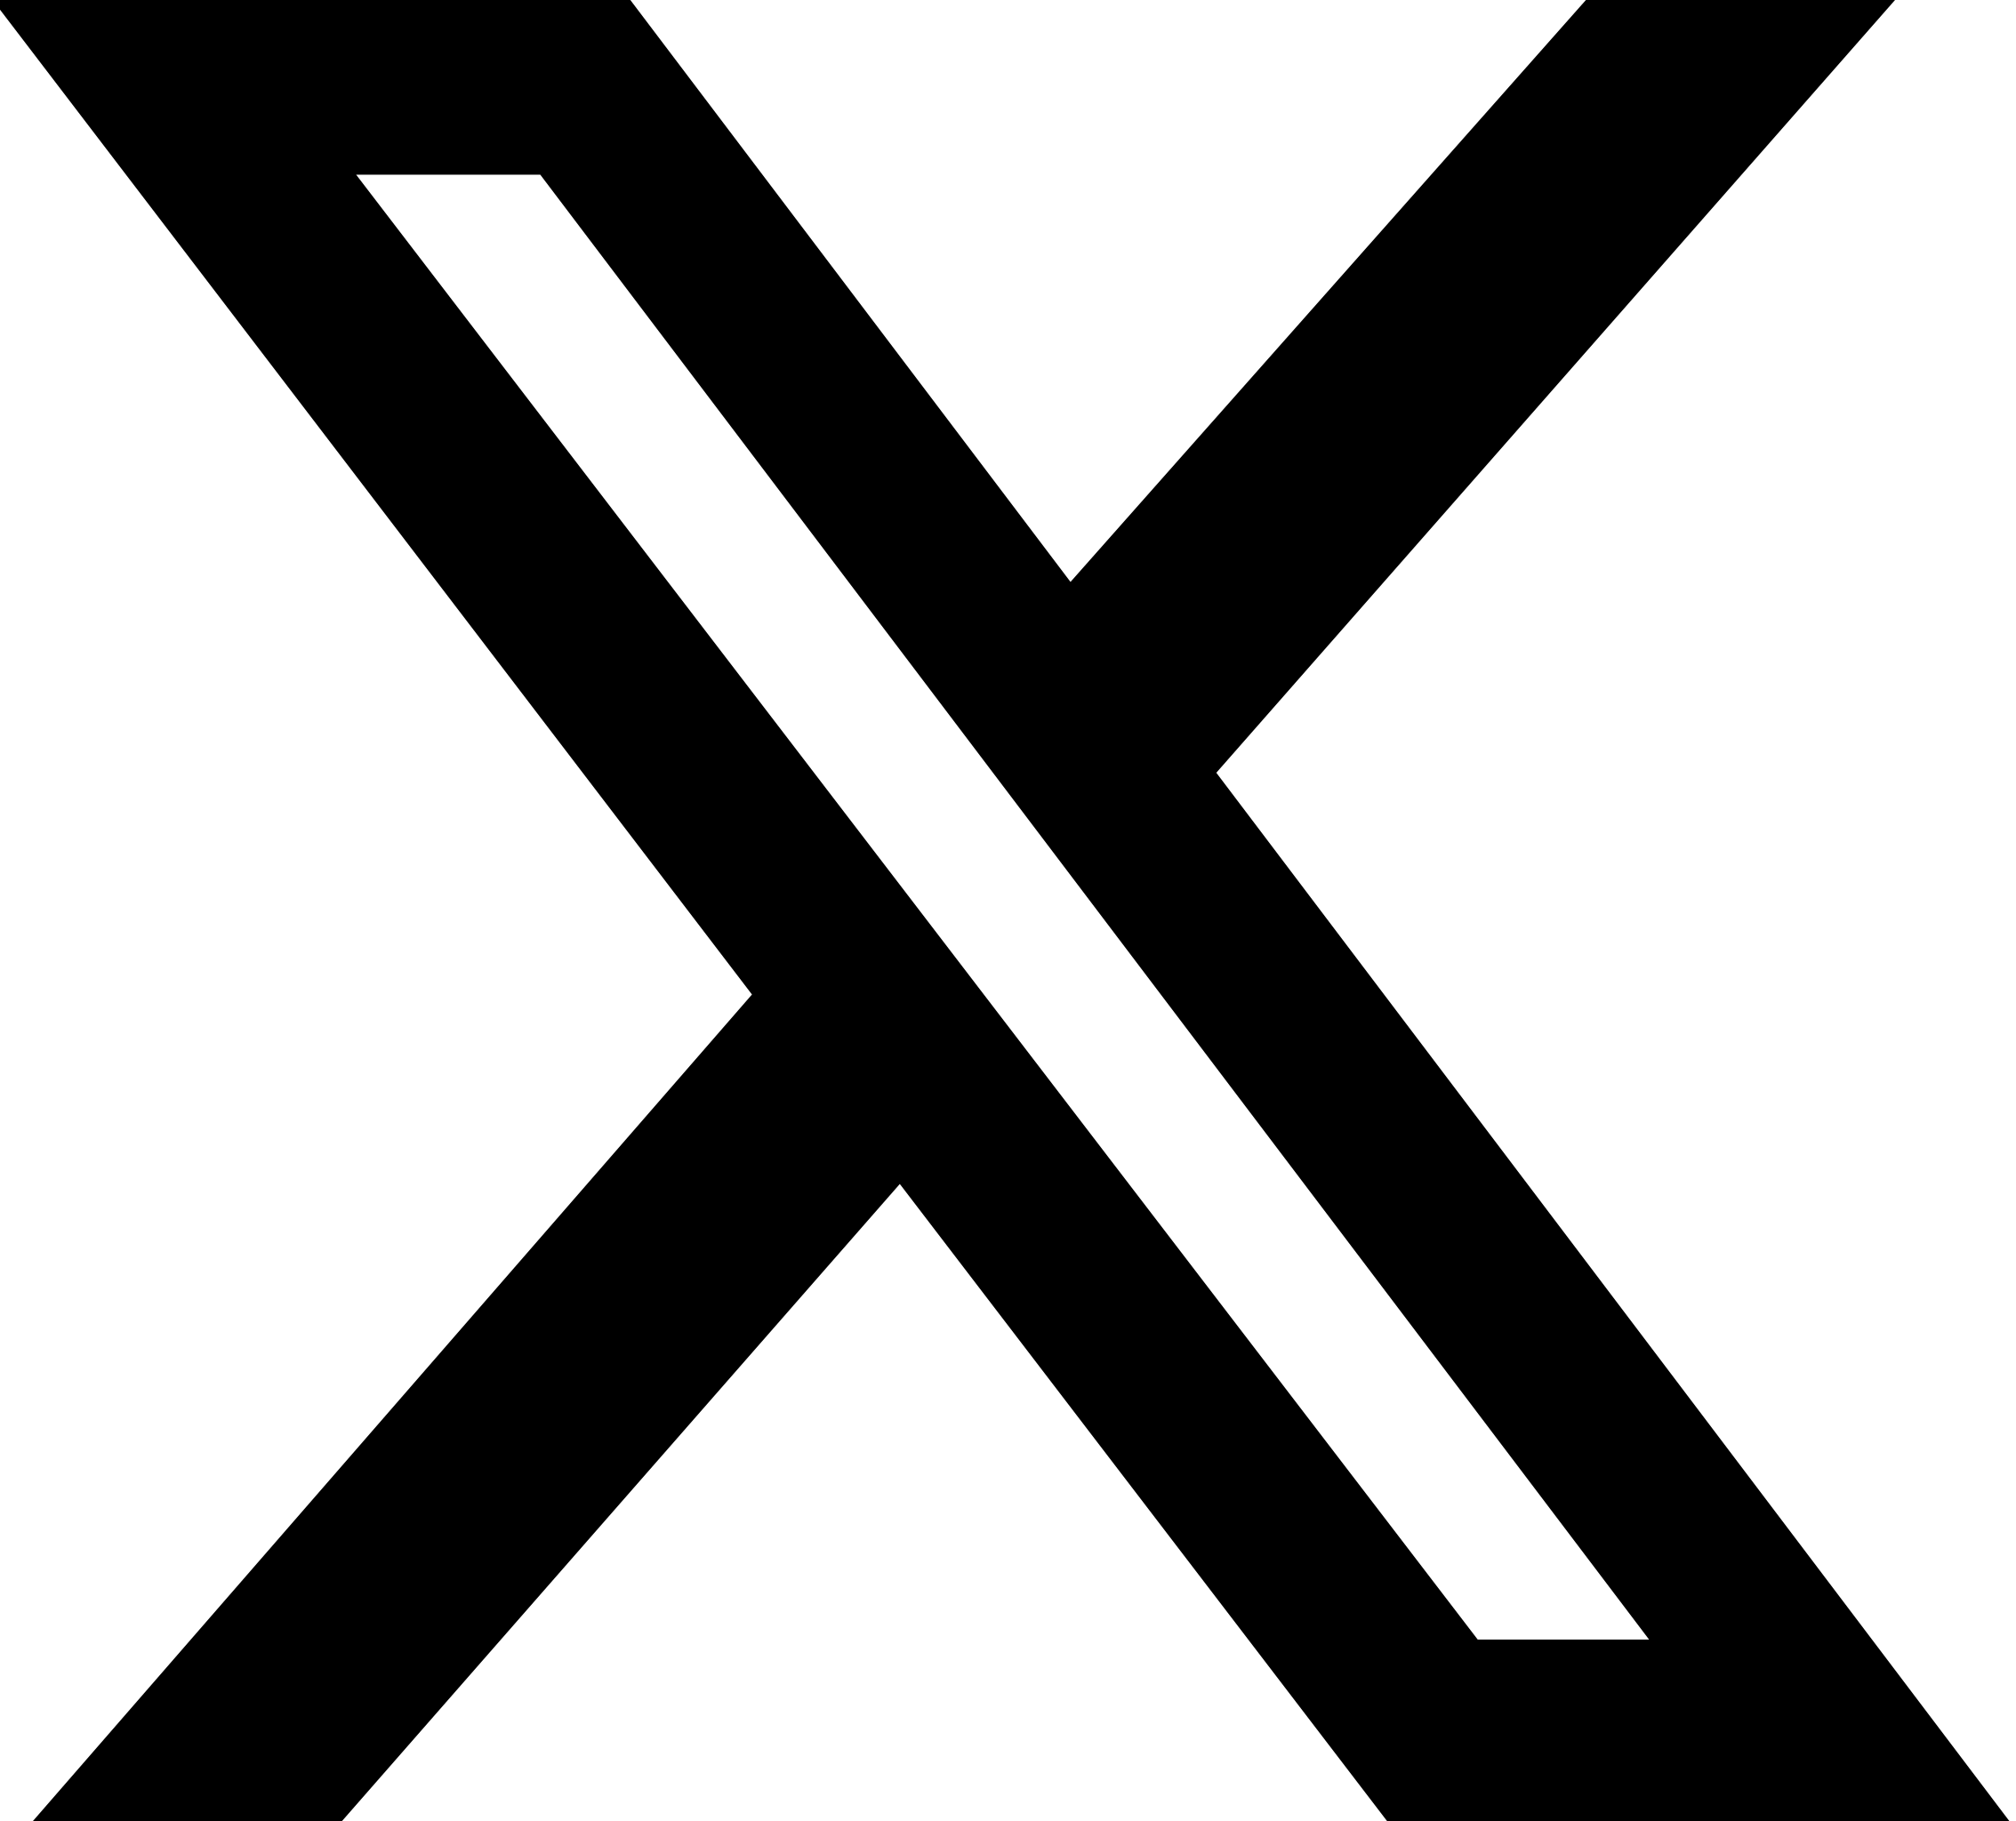 File:Typeform Logo.svg - Wikipedia